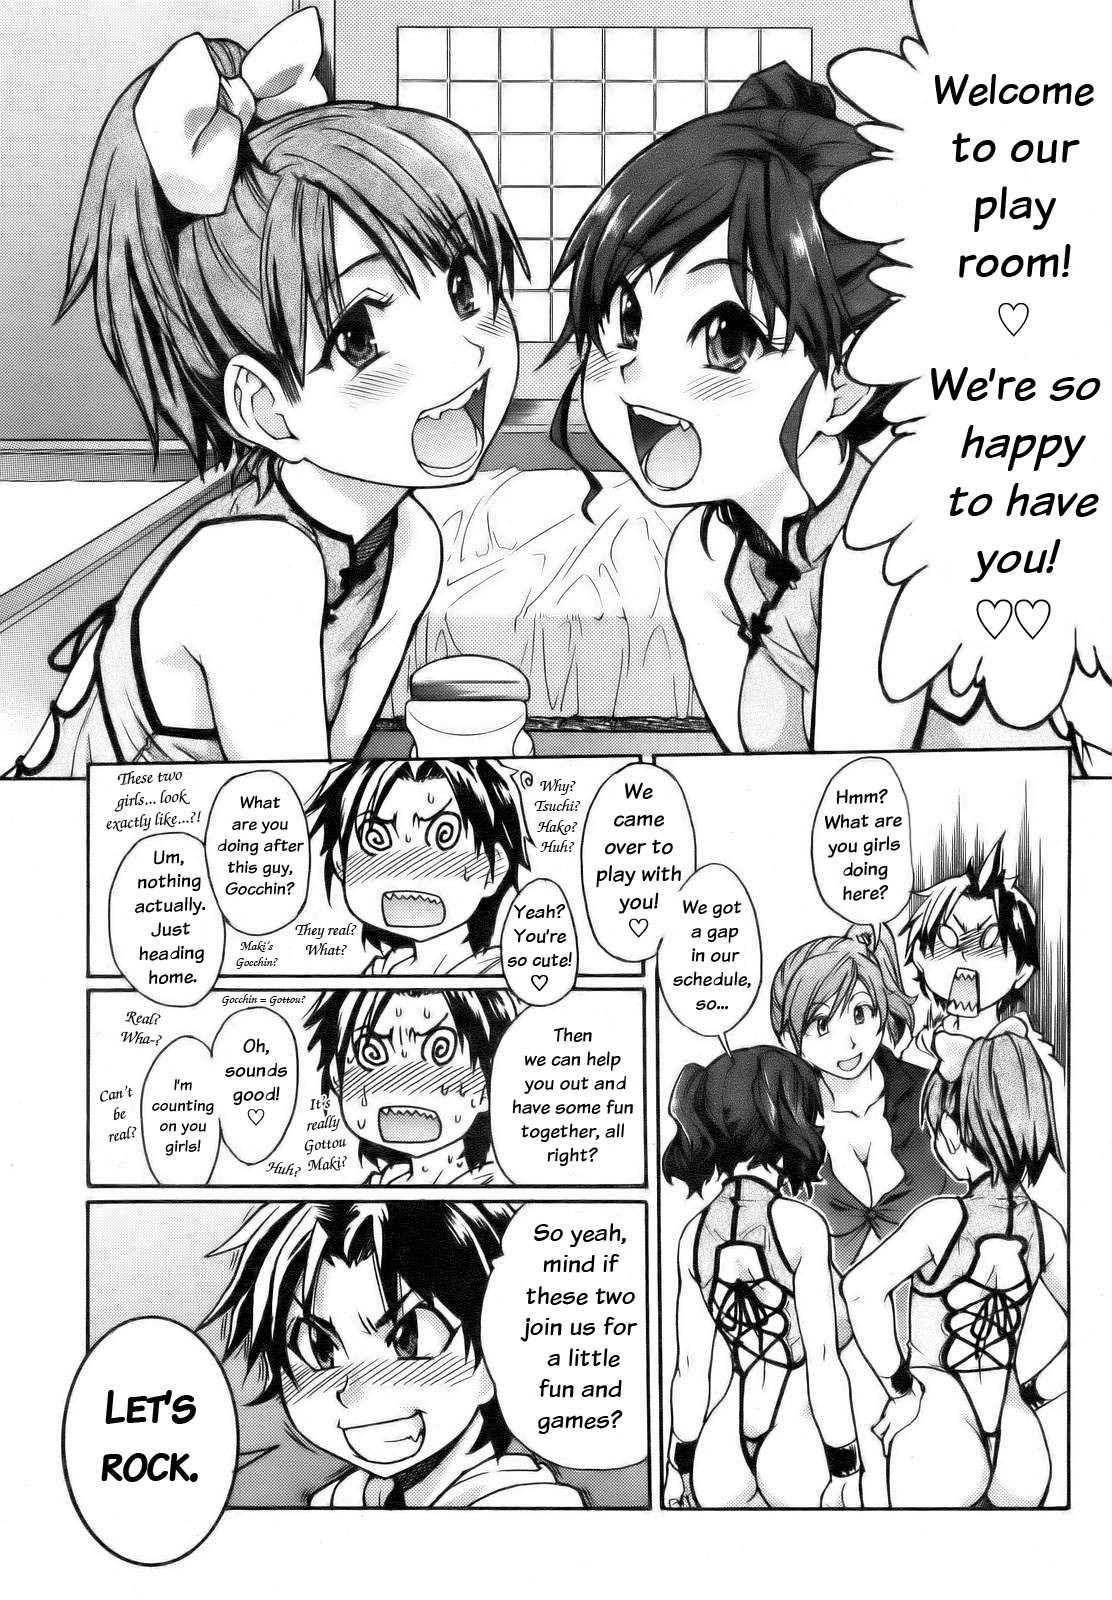 Musume in a House of Vice3 5 hentai manga